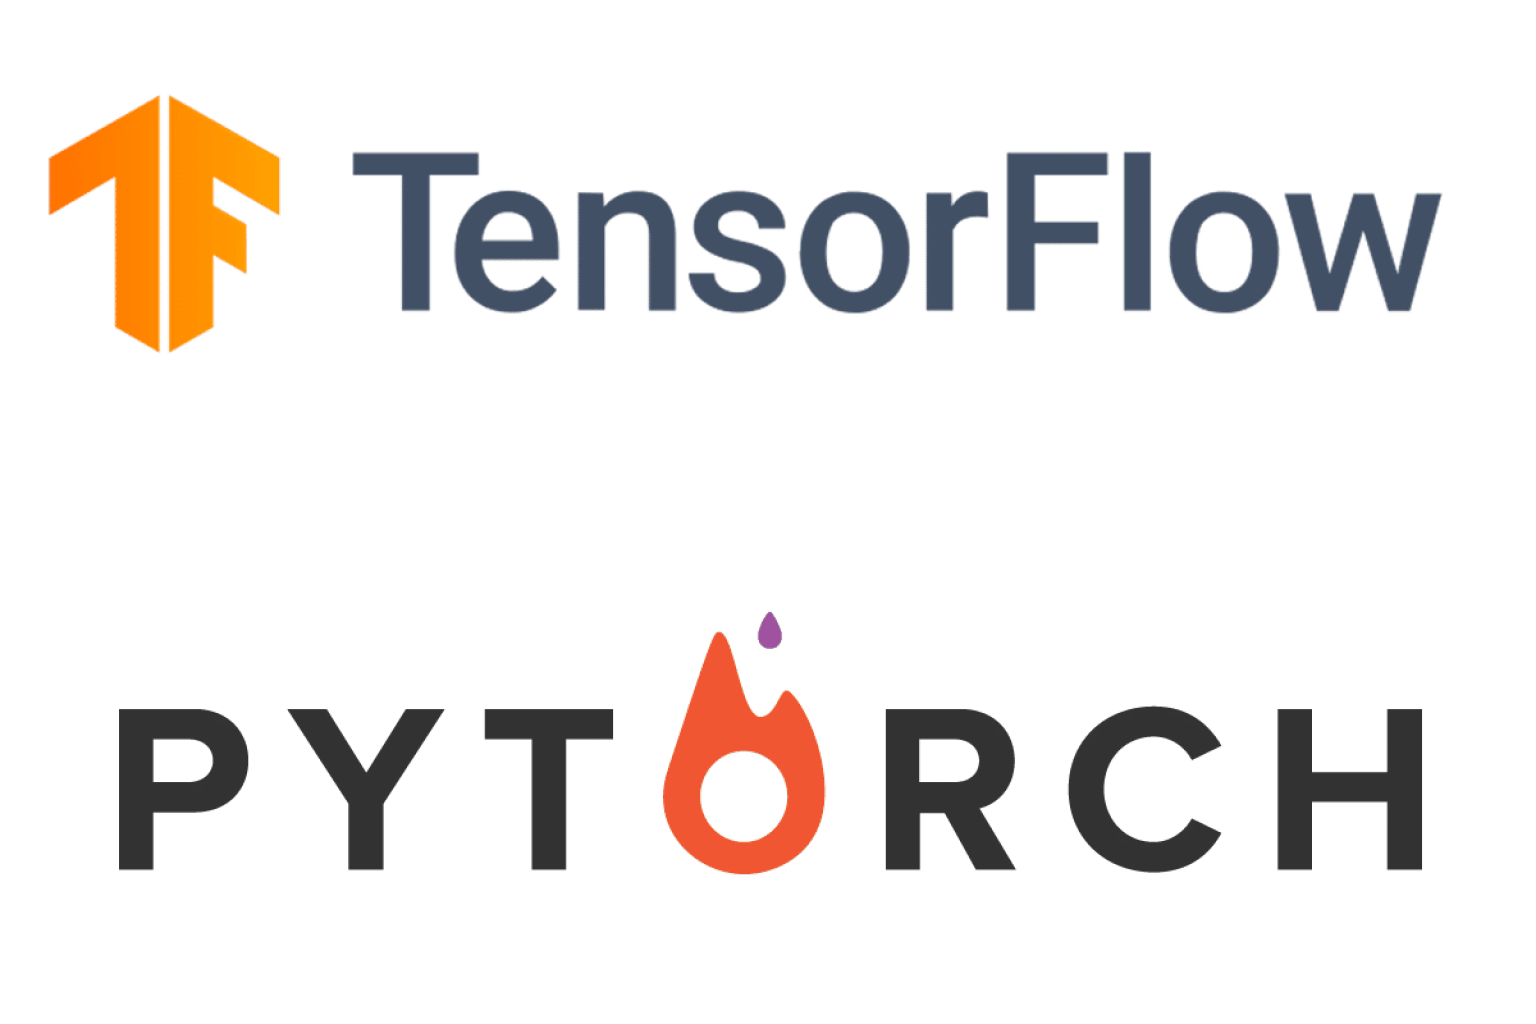 PyTorch와 TensorFlow는 데이터 과학 커뮤니티에서 가장 많이 사용되는 딥 러닝 프레임워크입니다.최근 PyTorch 2.0이 출시되면서 많은 사람들이 텐서플로우의 지배력과 경쟁할 수 있을지 궁금해하고 있습니다.이 블로그 포스트에서는 PyTorch 2.0과 TensorFlow를 비교하고 PyTorch 2.0이 모두가 말하는 게임 체인저인지 알아보겠습니다.